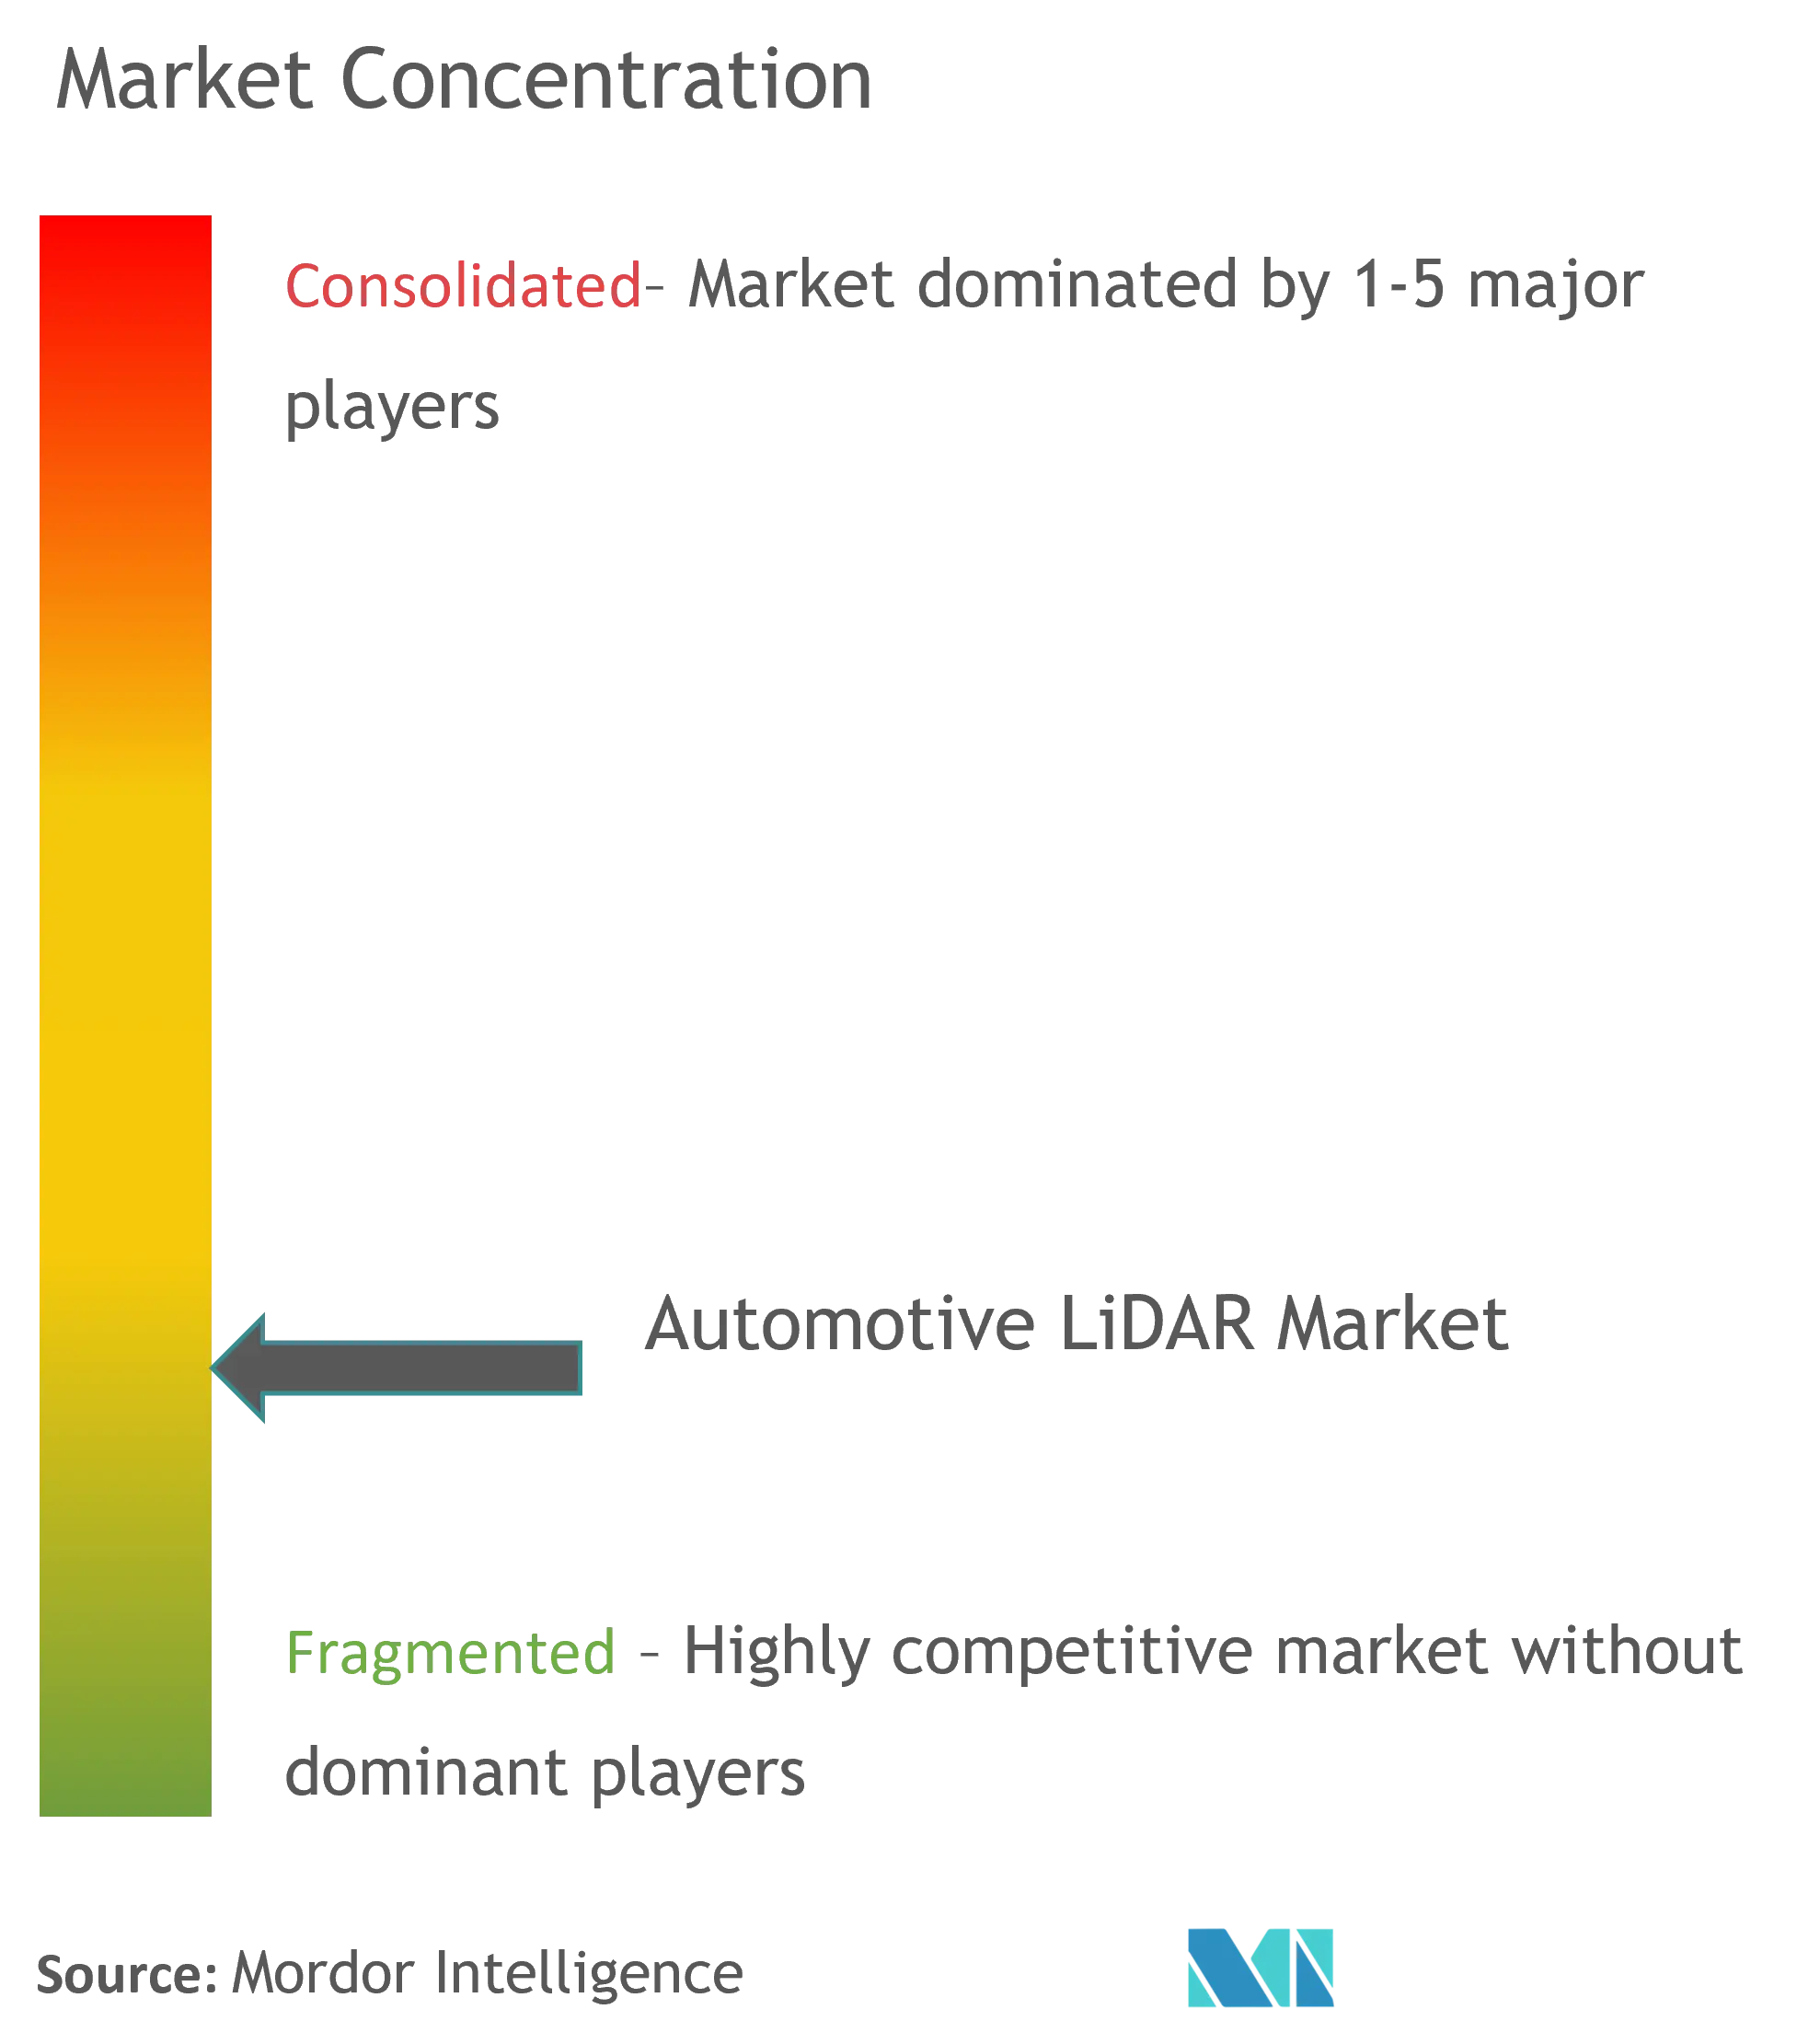 Automotive LiDAR Market Concentration